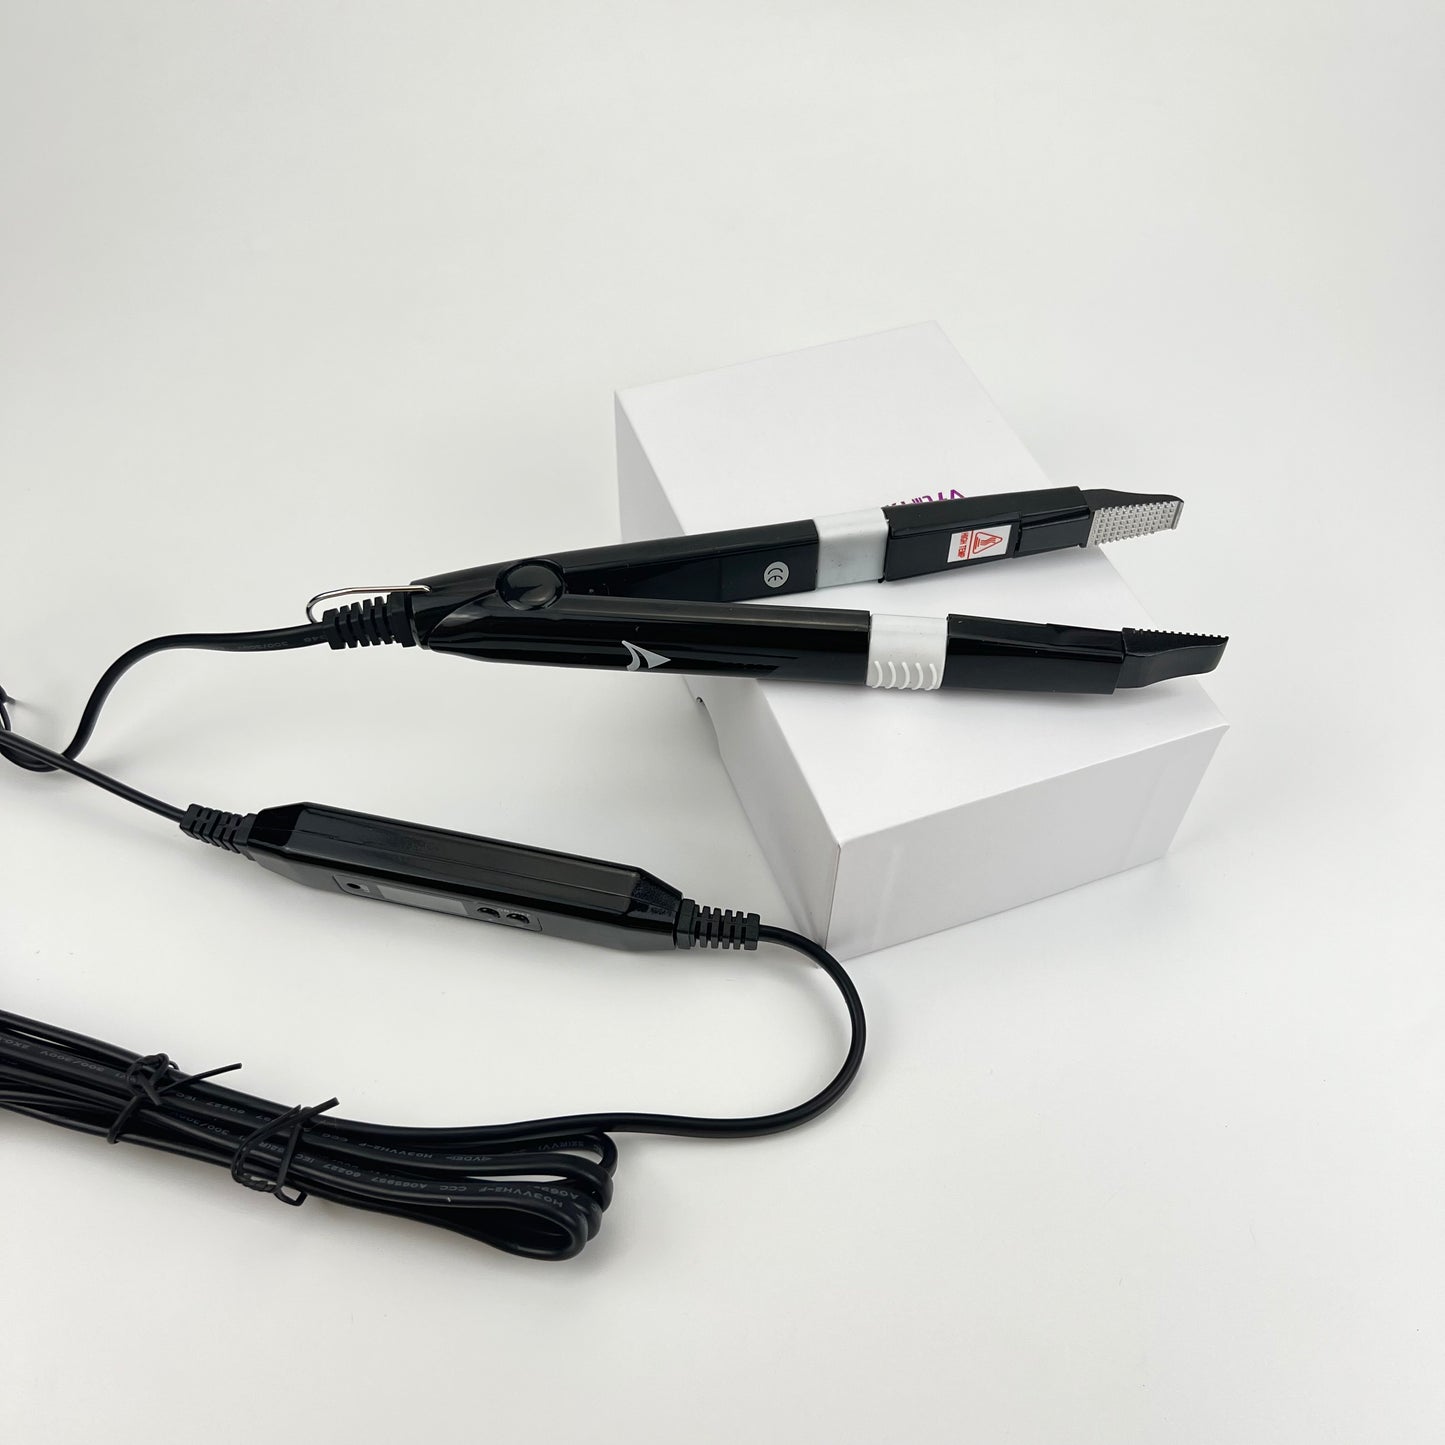 simple V-Light hair extension system kit (free shipping--Regular Packaging)